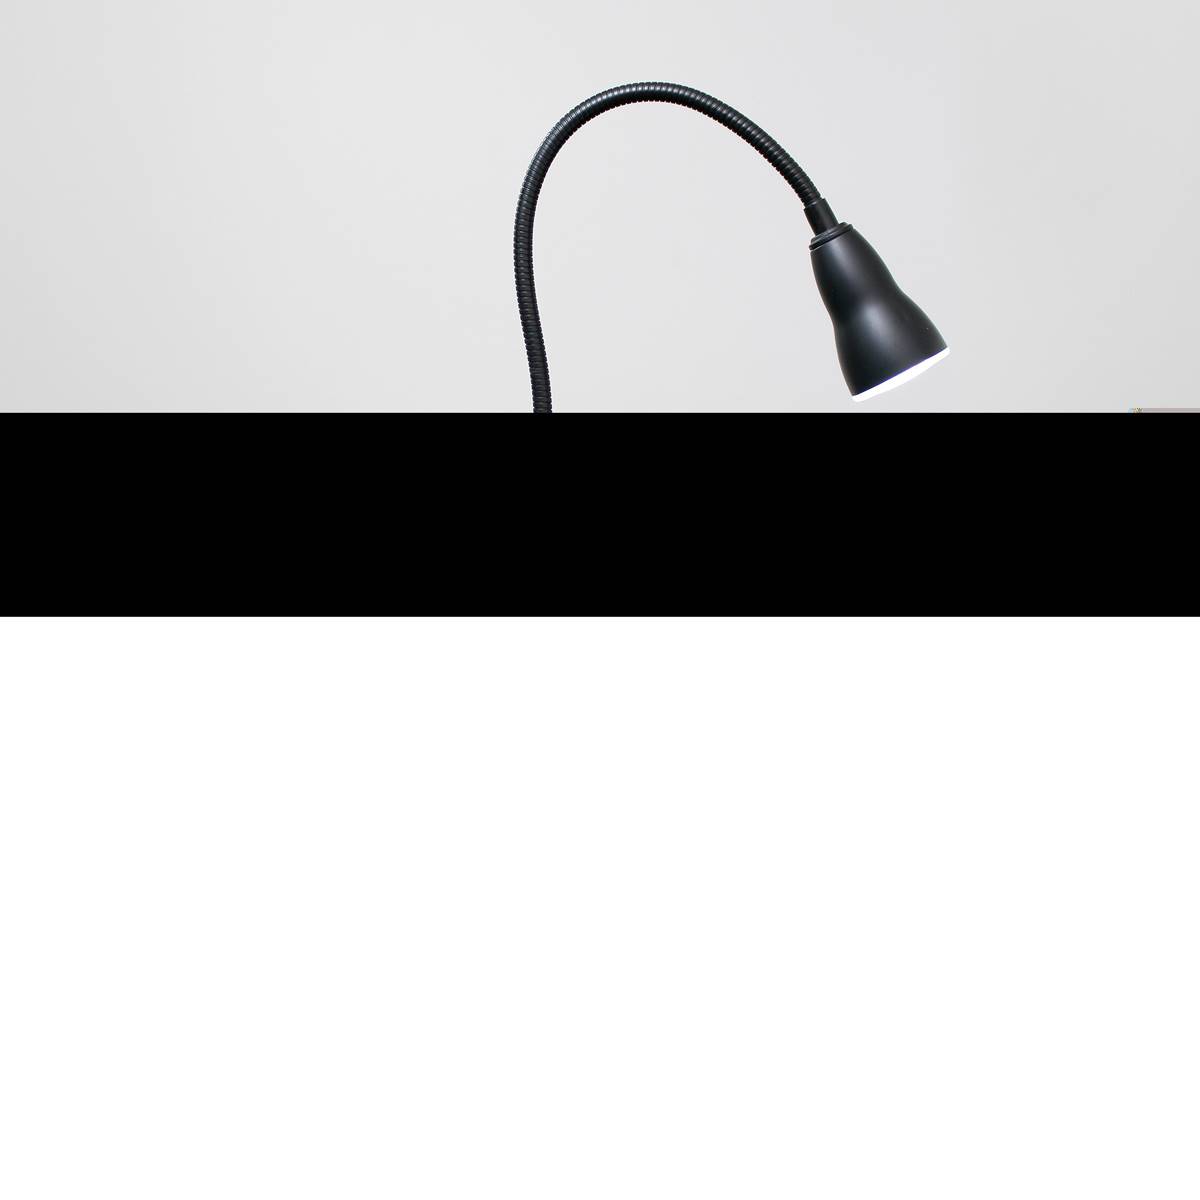 Simple Designs 1W LED Gooseneck Clip Light Desk Lamp